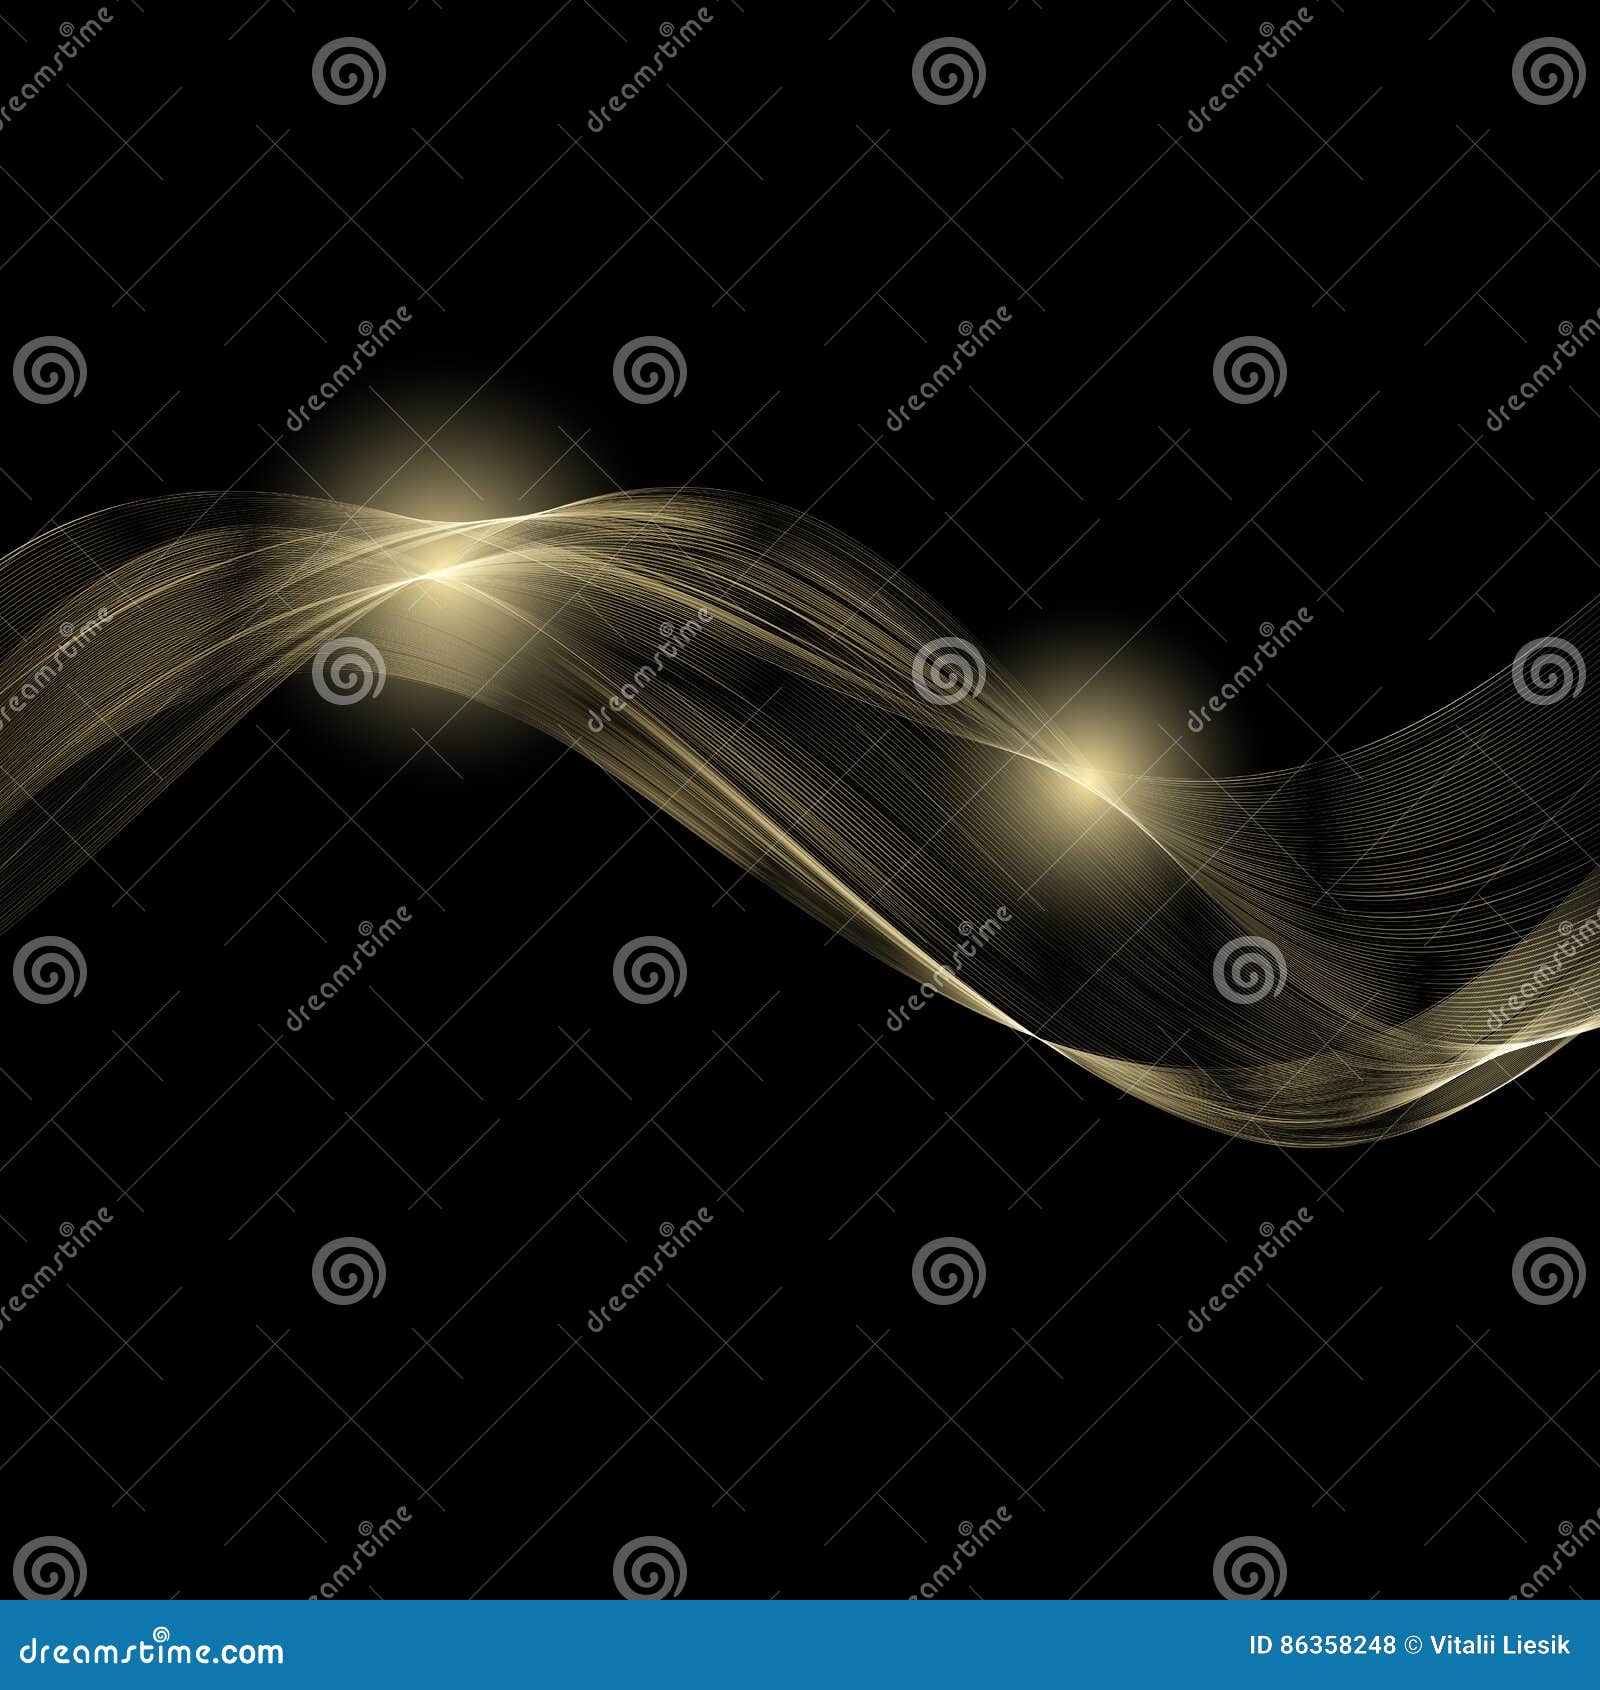 Abstract Golden waves stock illustration. Illustration of golden - 86358248